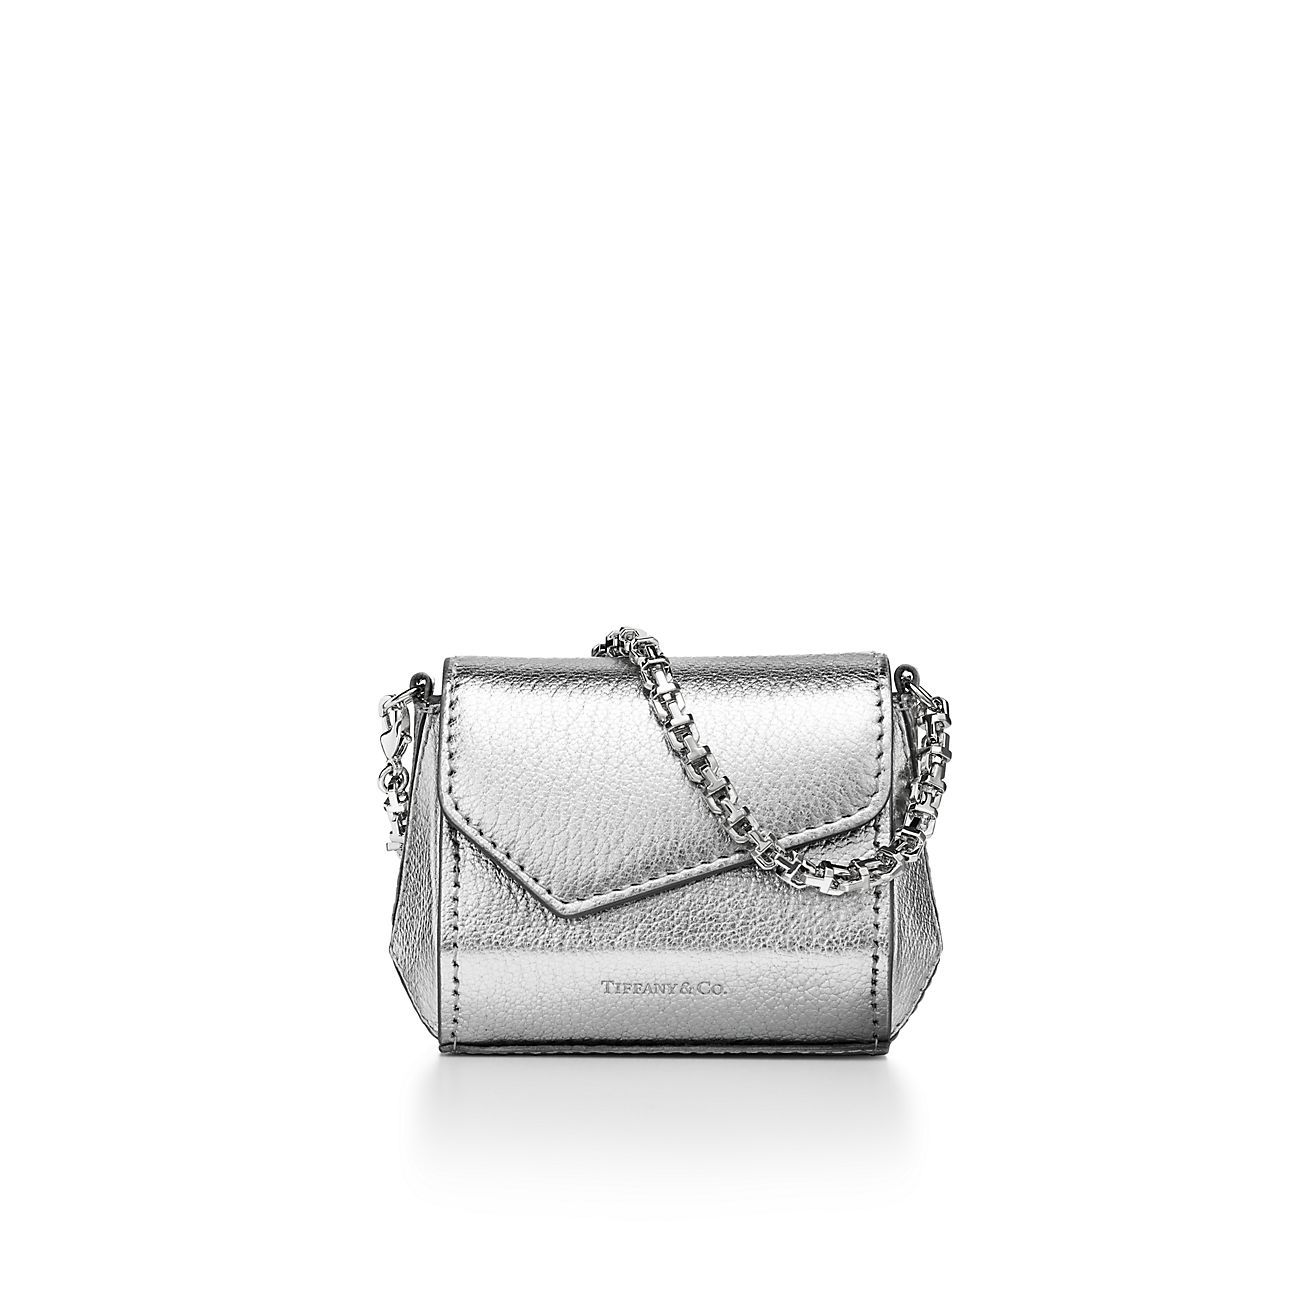 Tiffany T Nano Bag in Silver Leather | Tiffany & Co.